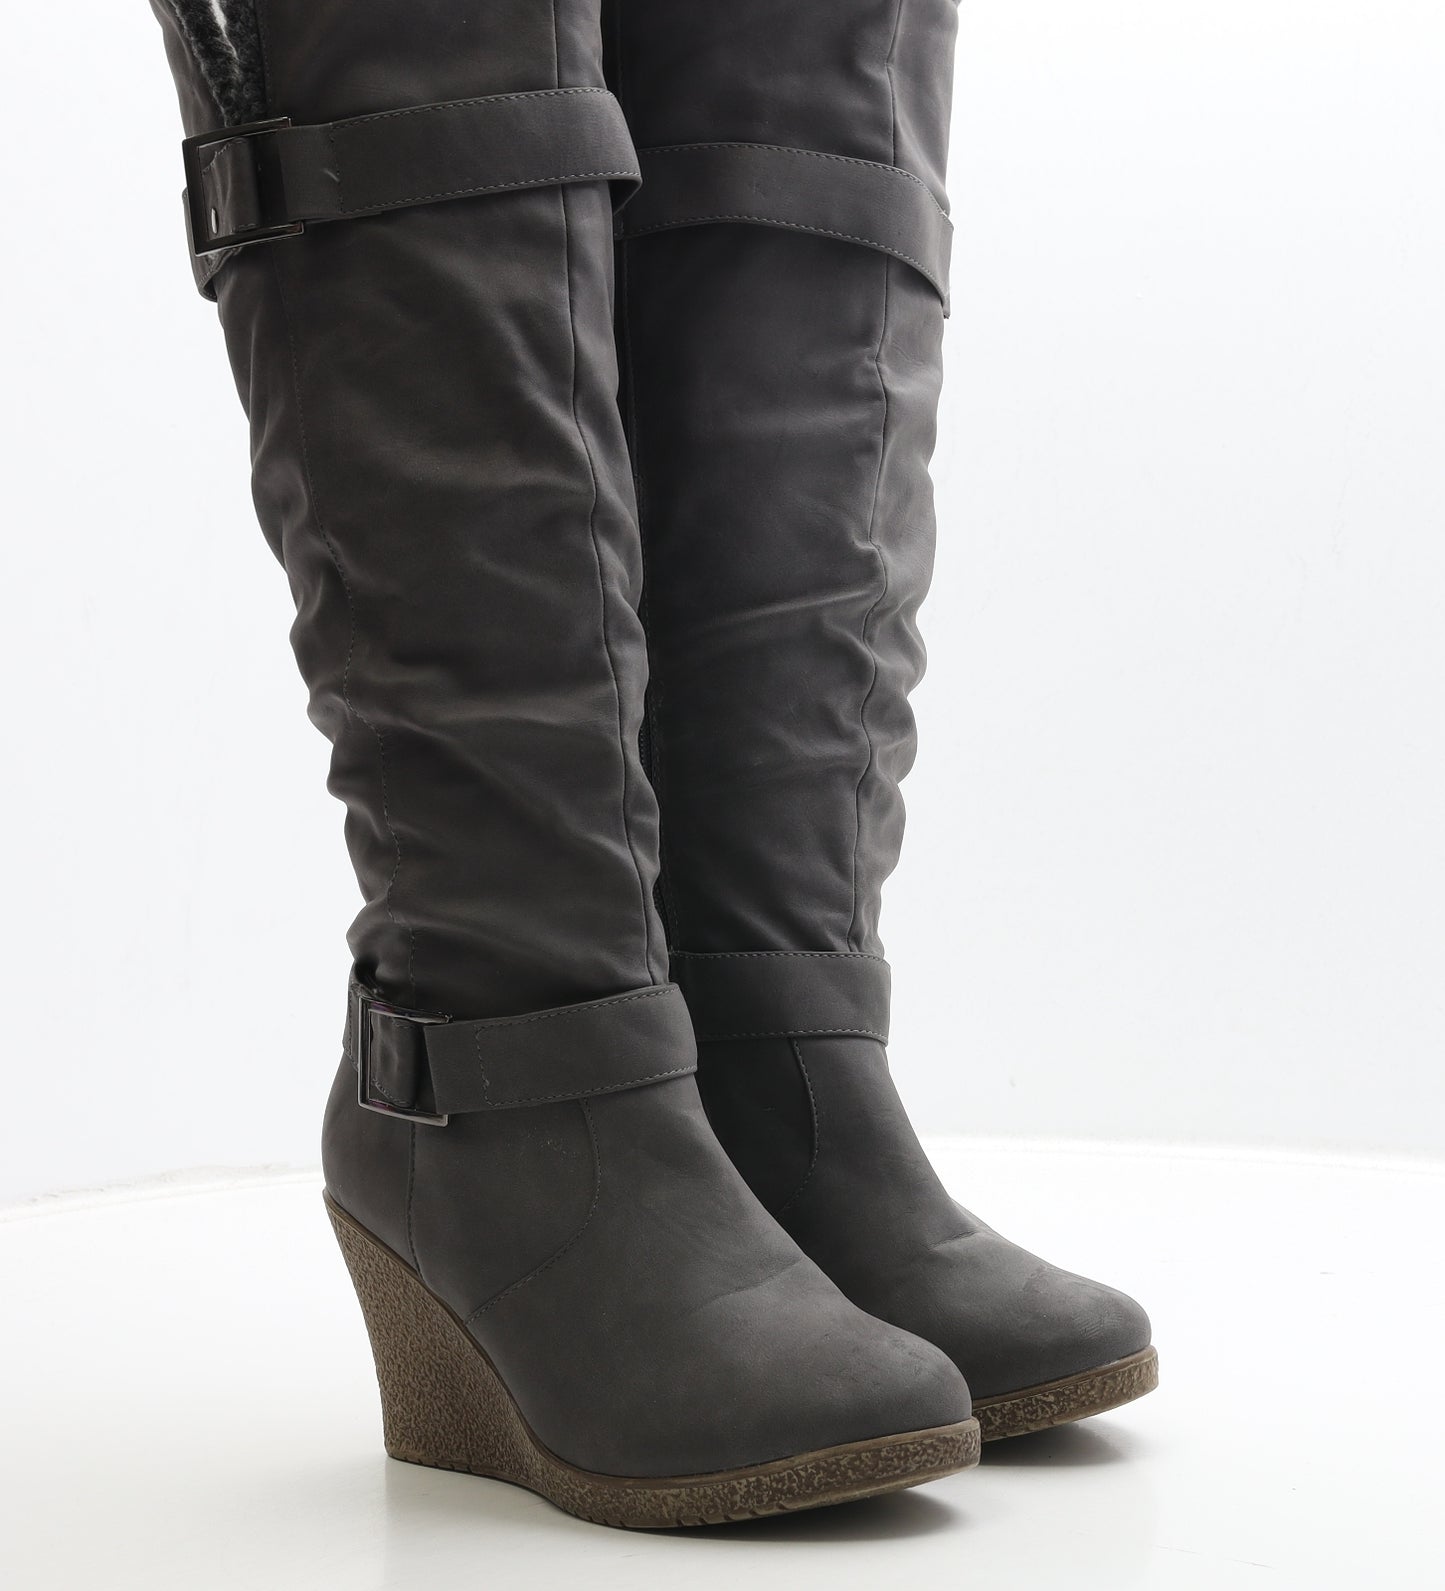 Preworn Womens Grey Leather Bootie Boot UK 3 36